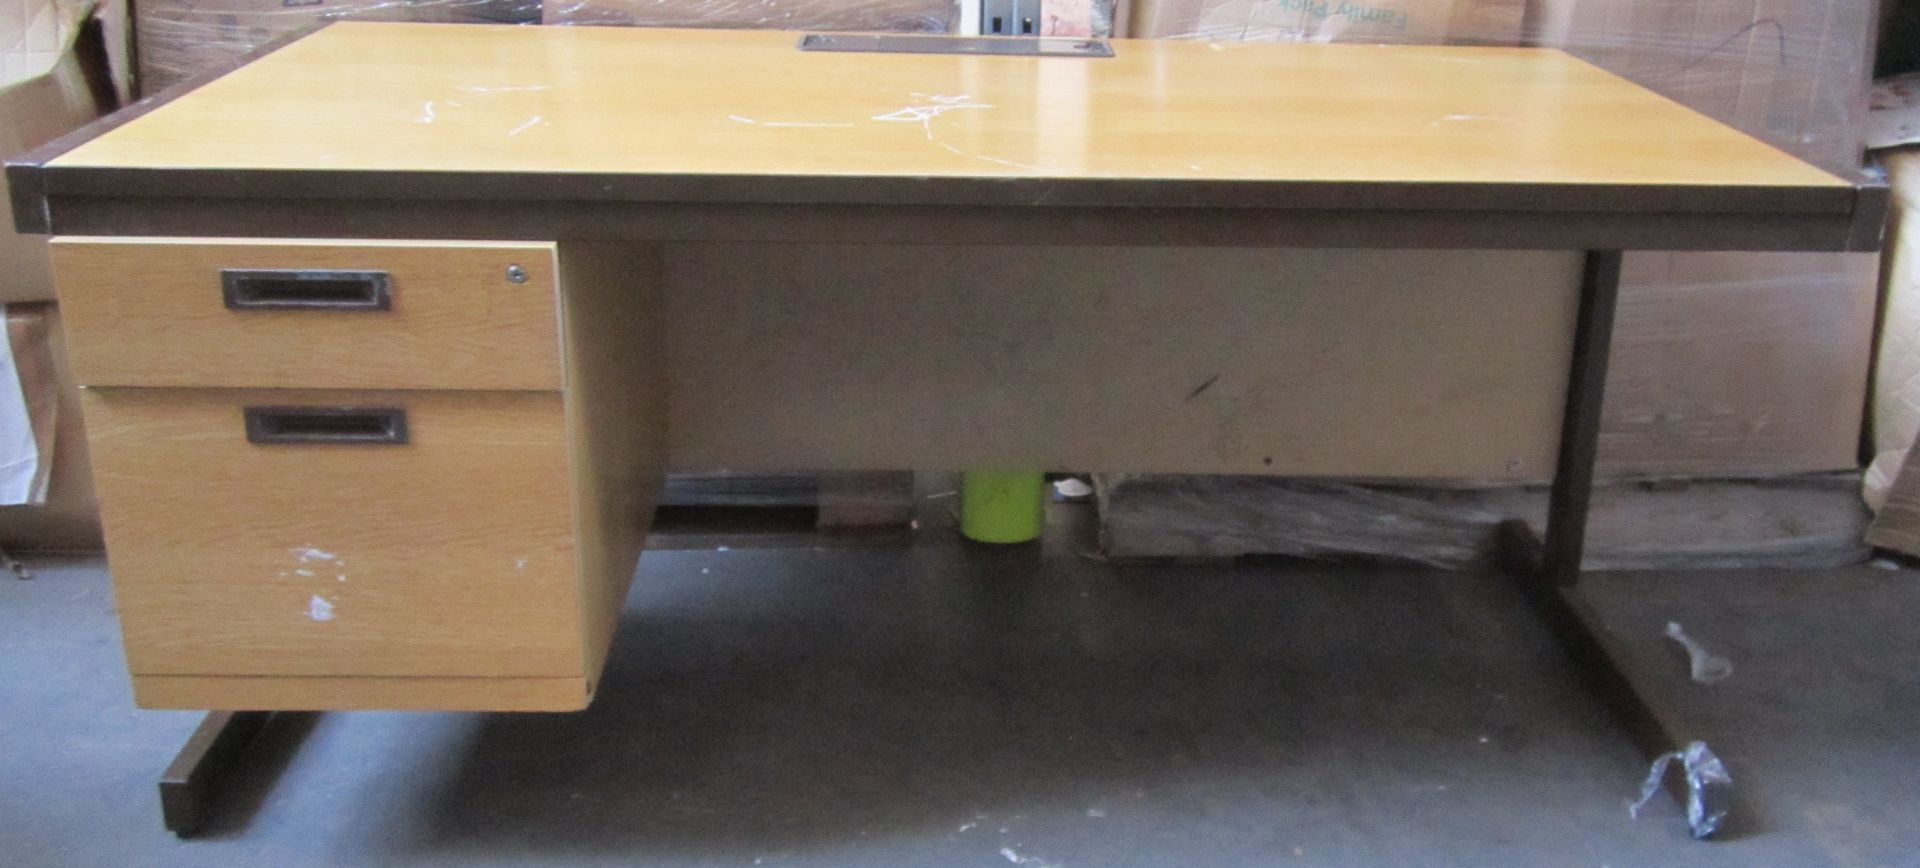 Furniture - Office Desk With Pedistal Attatched, Dark Brown Wood, 6.3x31.5x28.5''